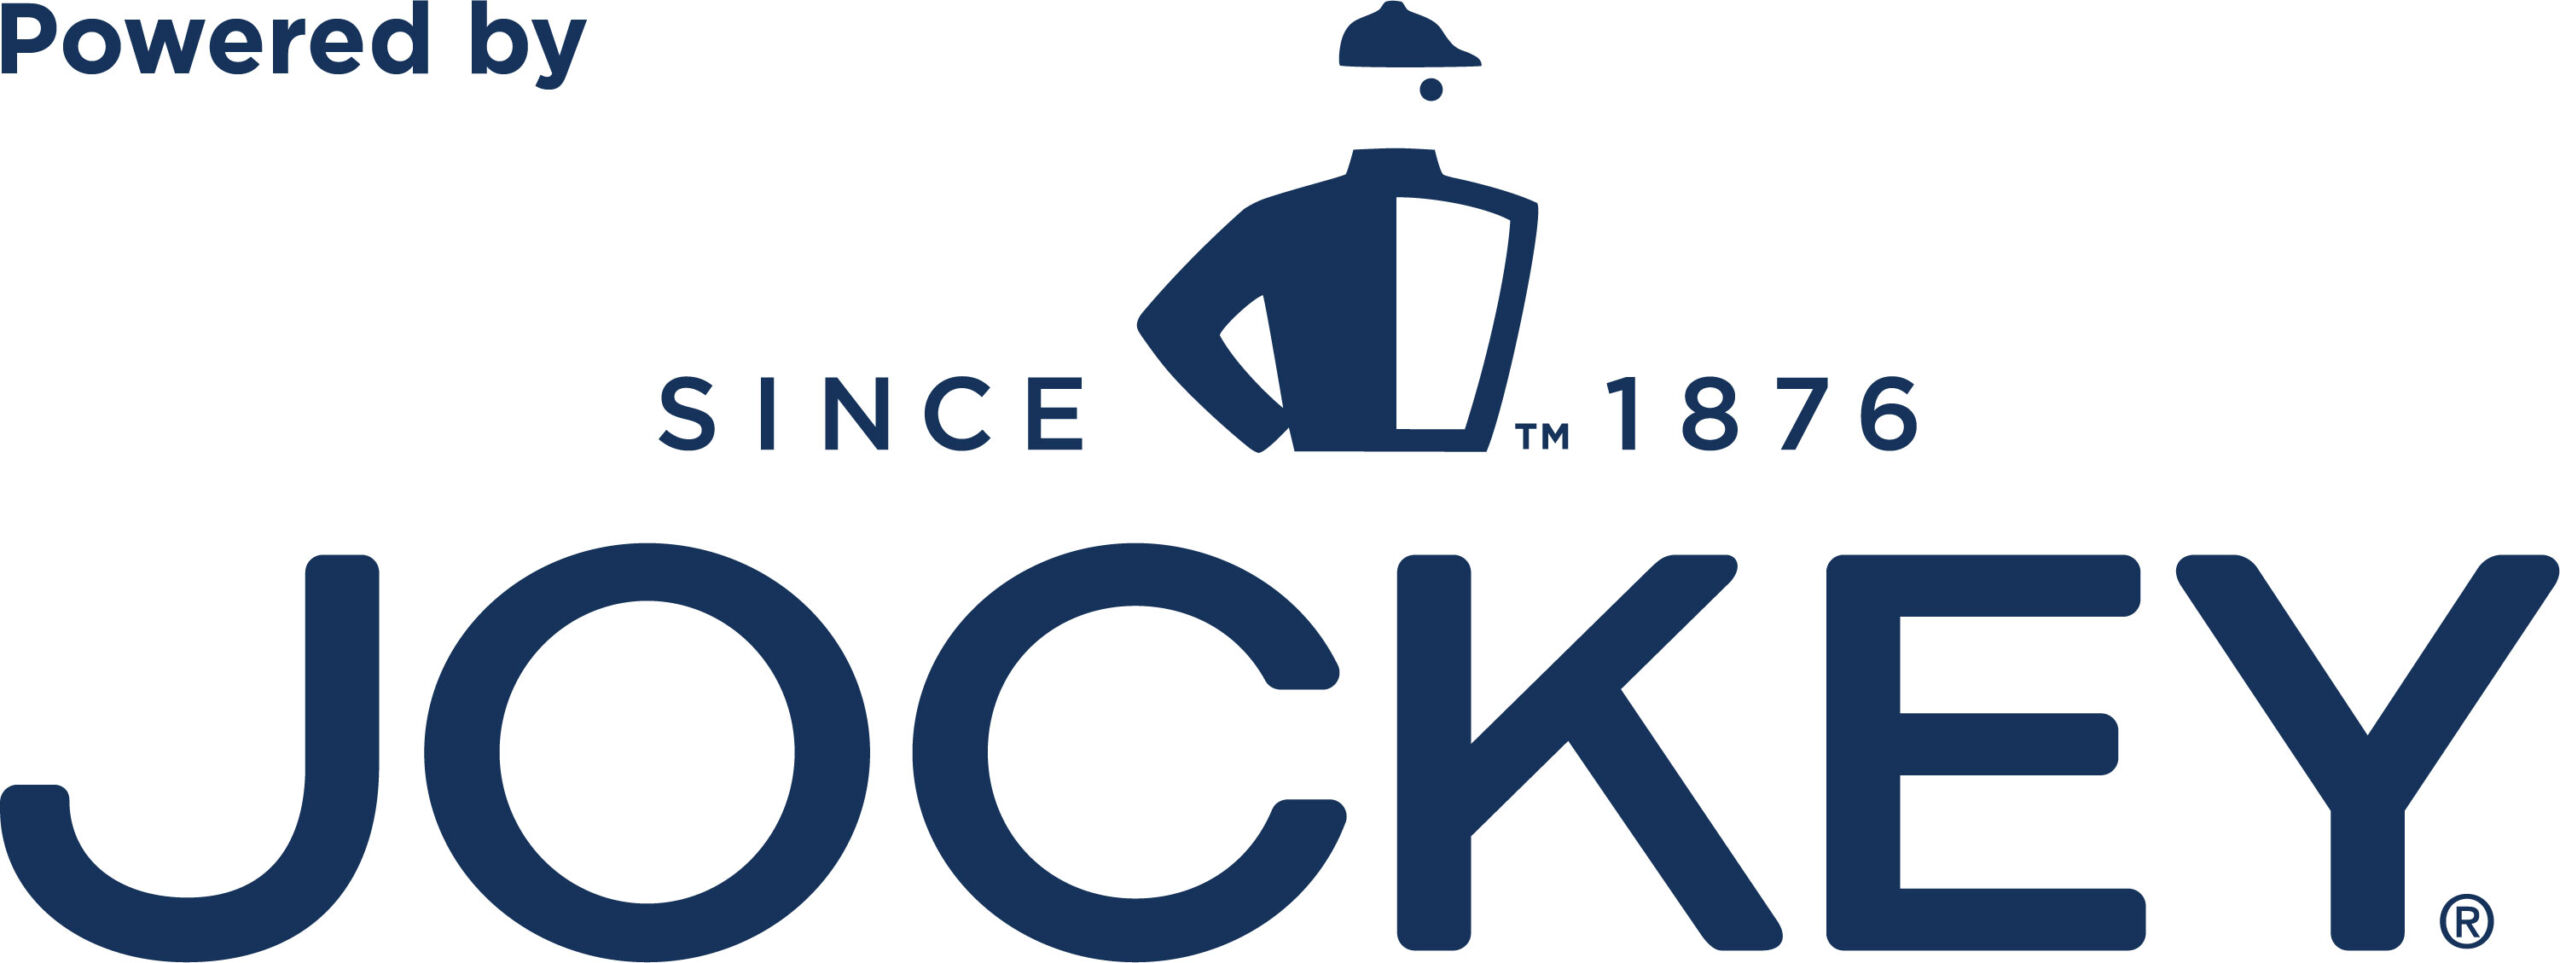 Jockey Bestbuyteencenter Logoupdate 1.31